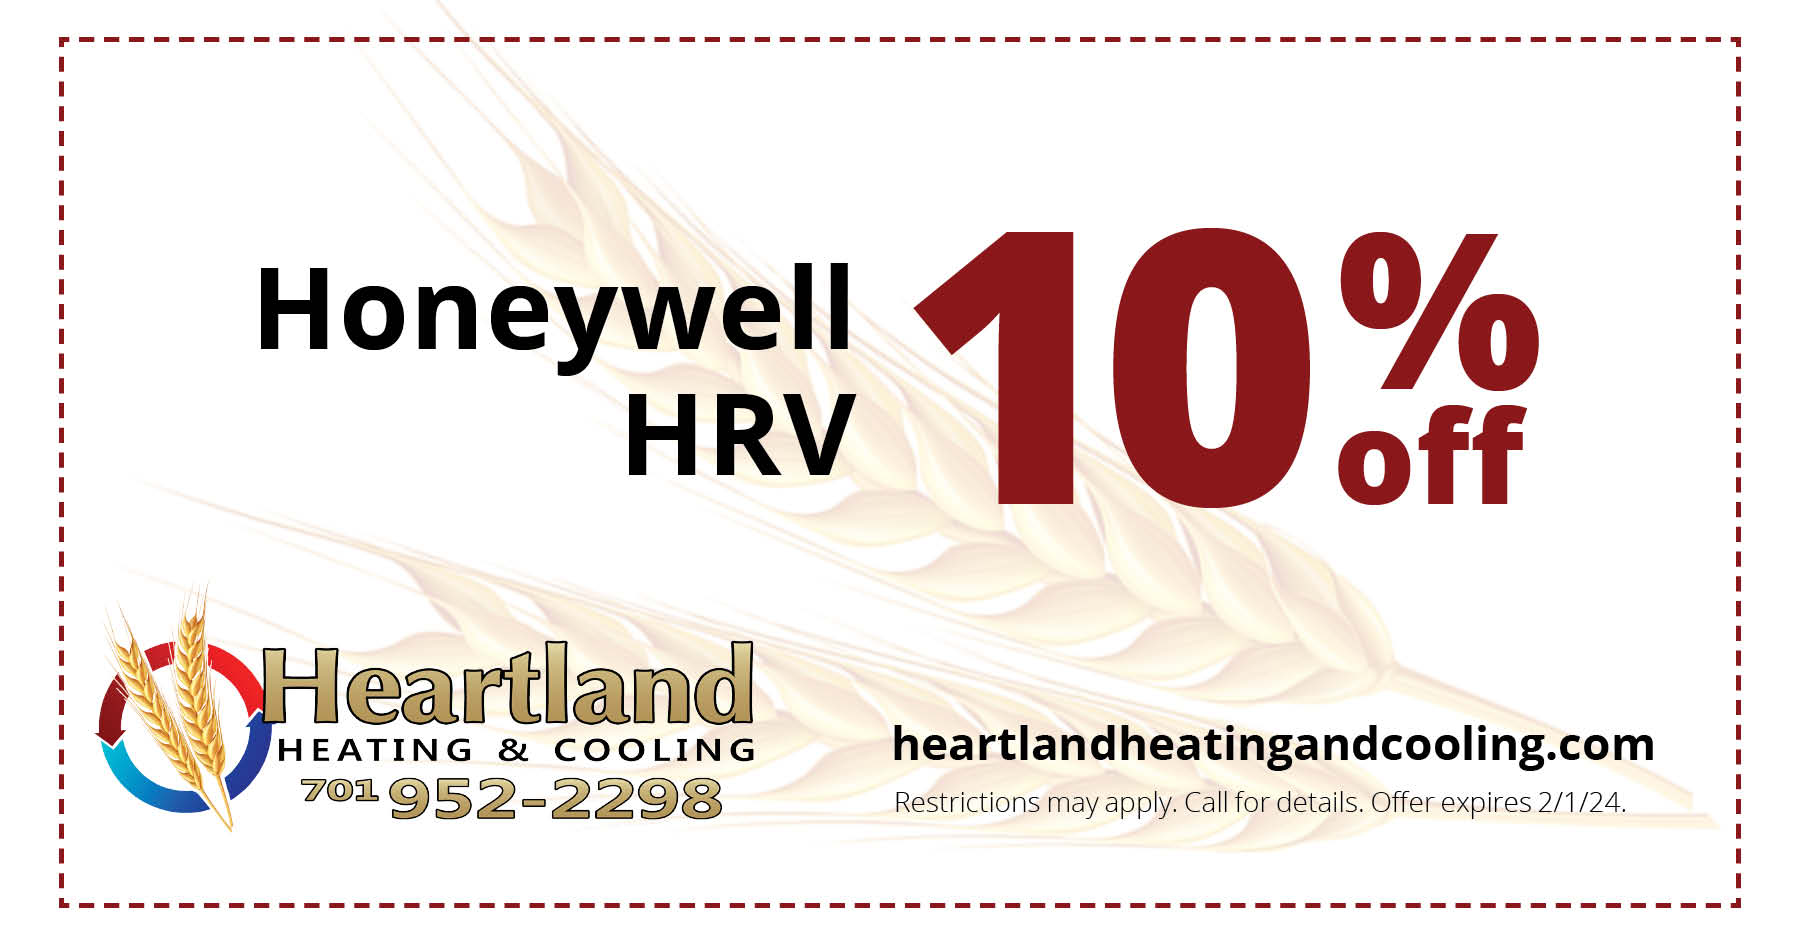 Honeywell HRV 10% off